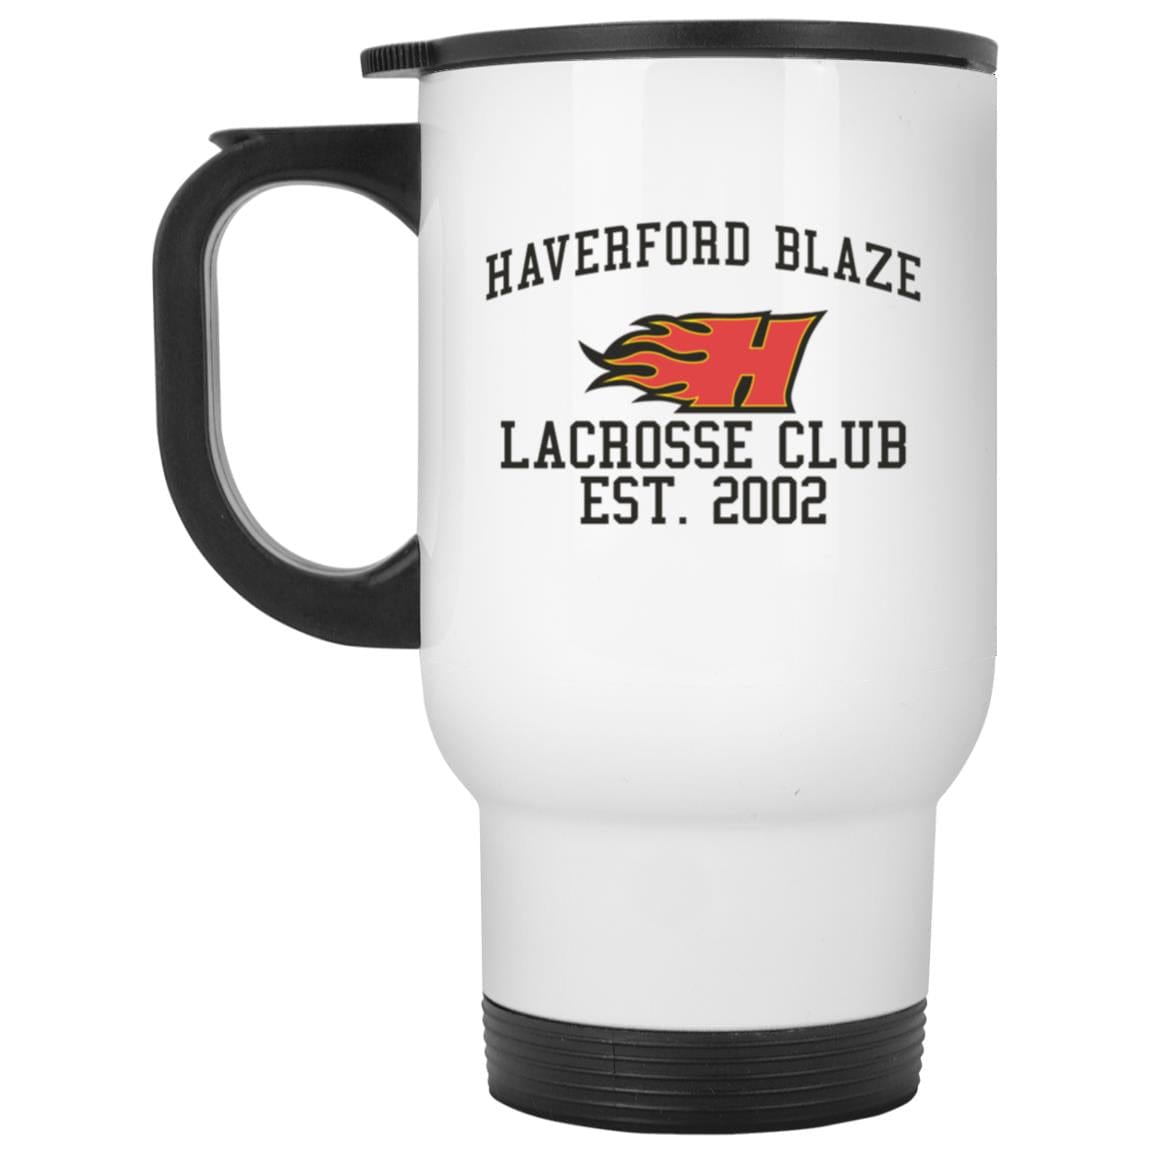 Haverford Blaze Lacrosse Stainless Steel Water Bottle Signature Lacrosse